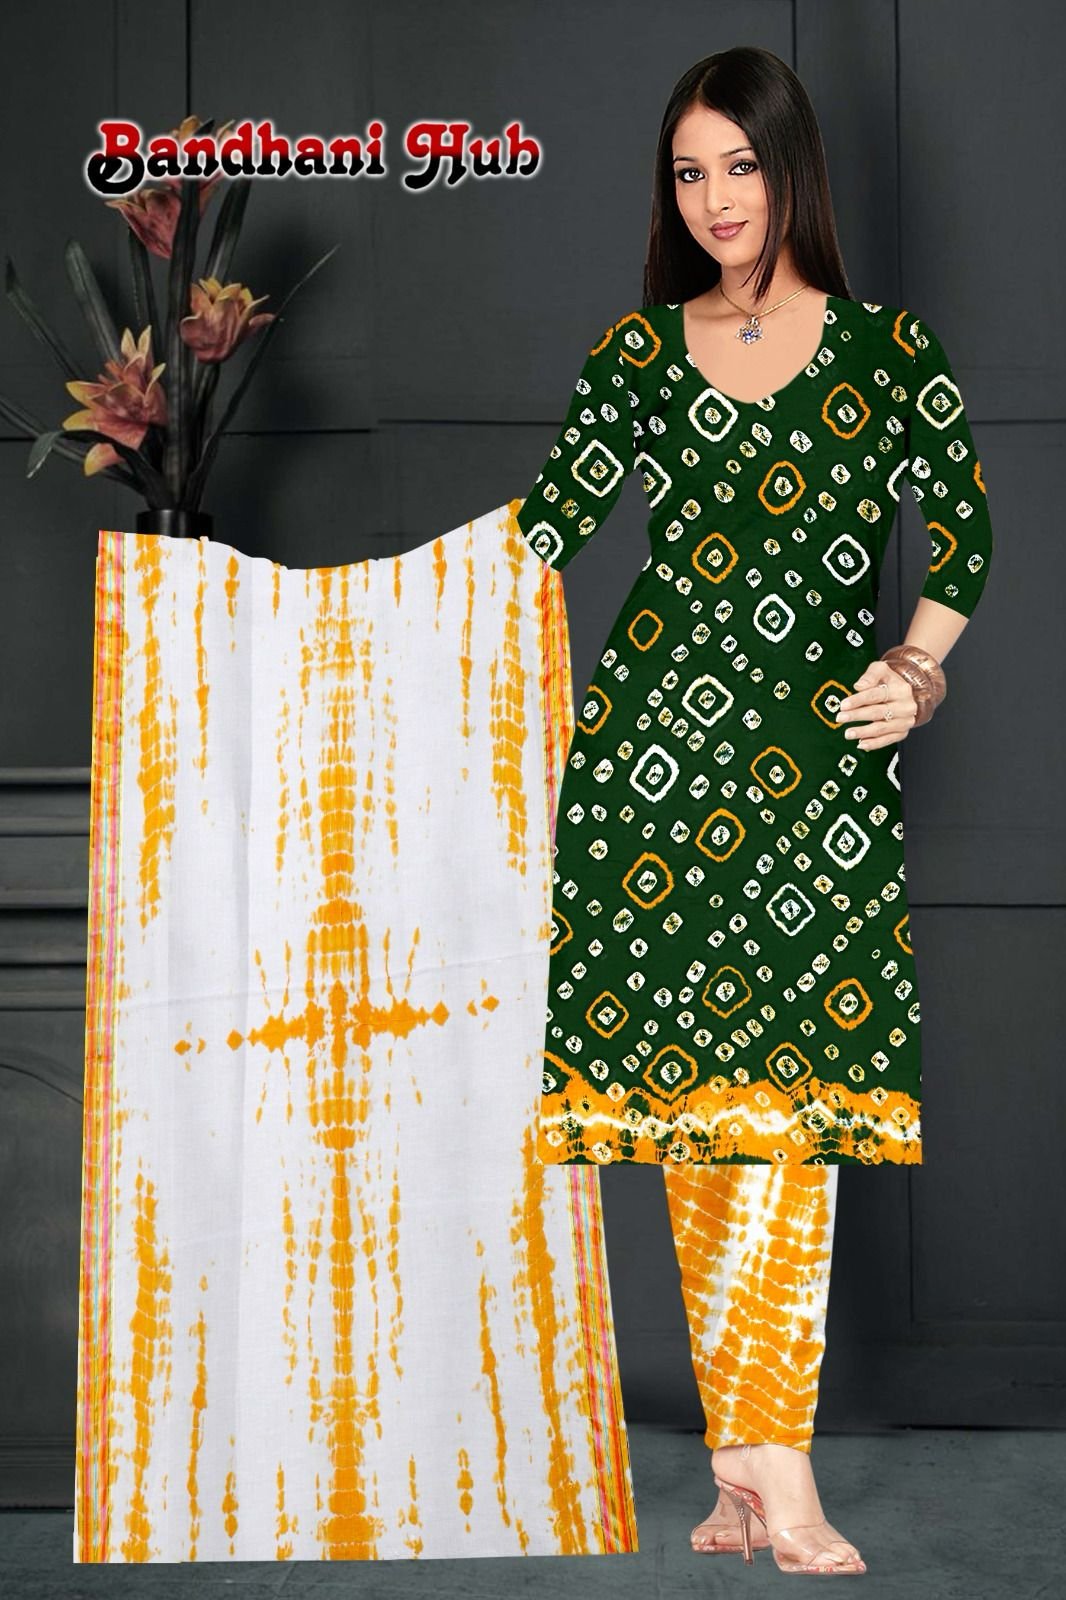 Buy MileandMile Women's Cotton Sangam Bandhani Dress Material with Dupatta  in Zari Border (Orange and Pink, Free Size) at Amazon.in